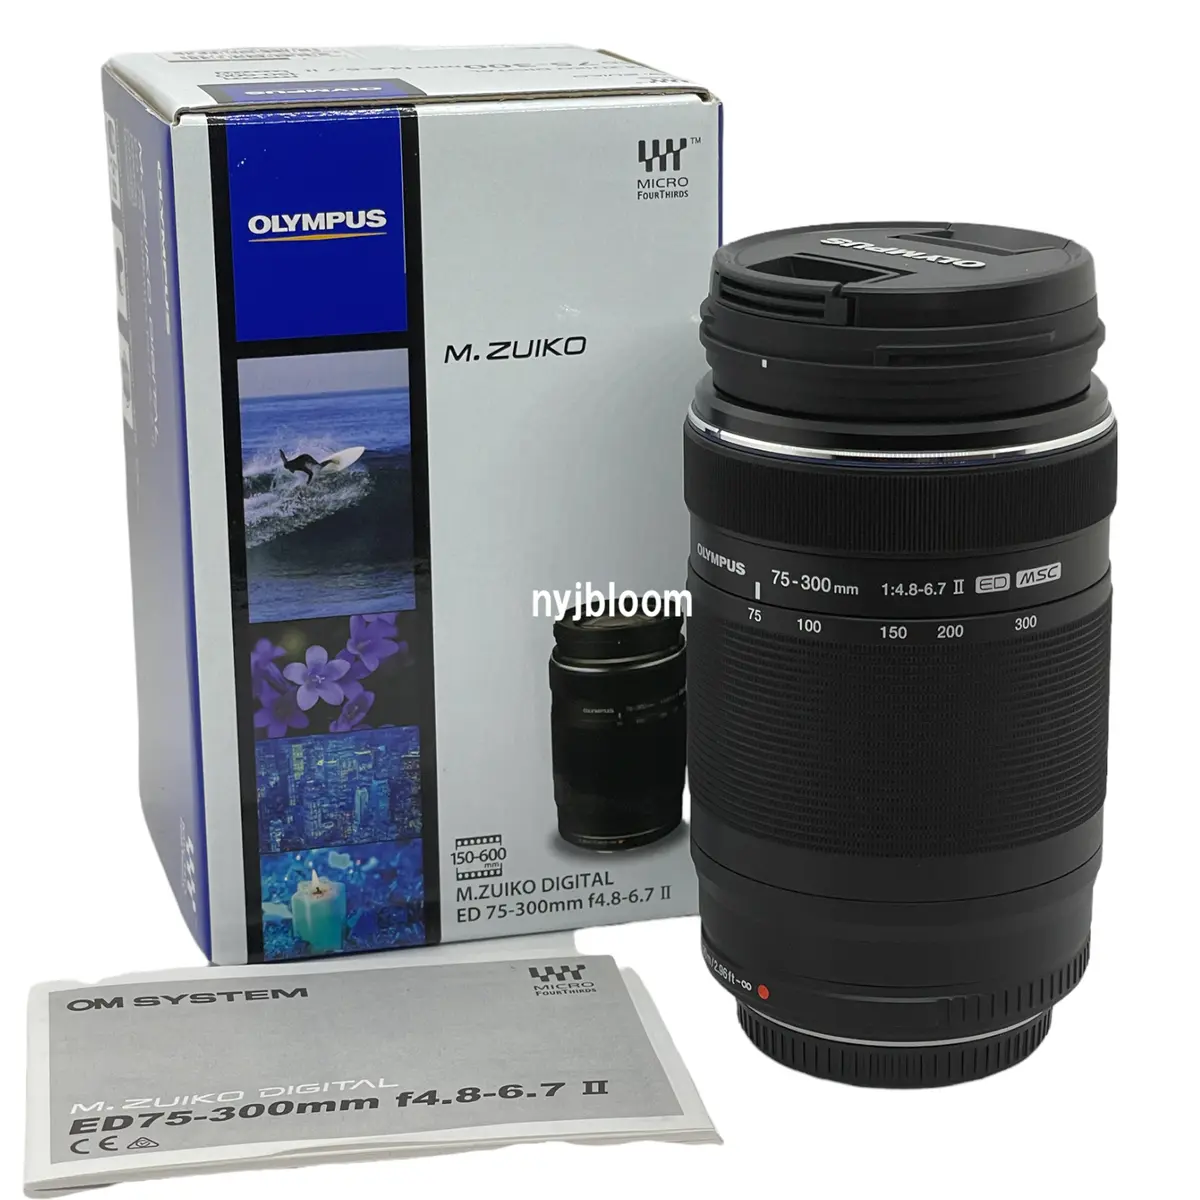 New Olympus M.ZUIKO DIGITAL ED 75-300mm f/4.8 - 6.7 II Lens | eBay